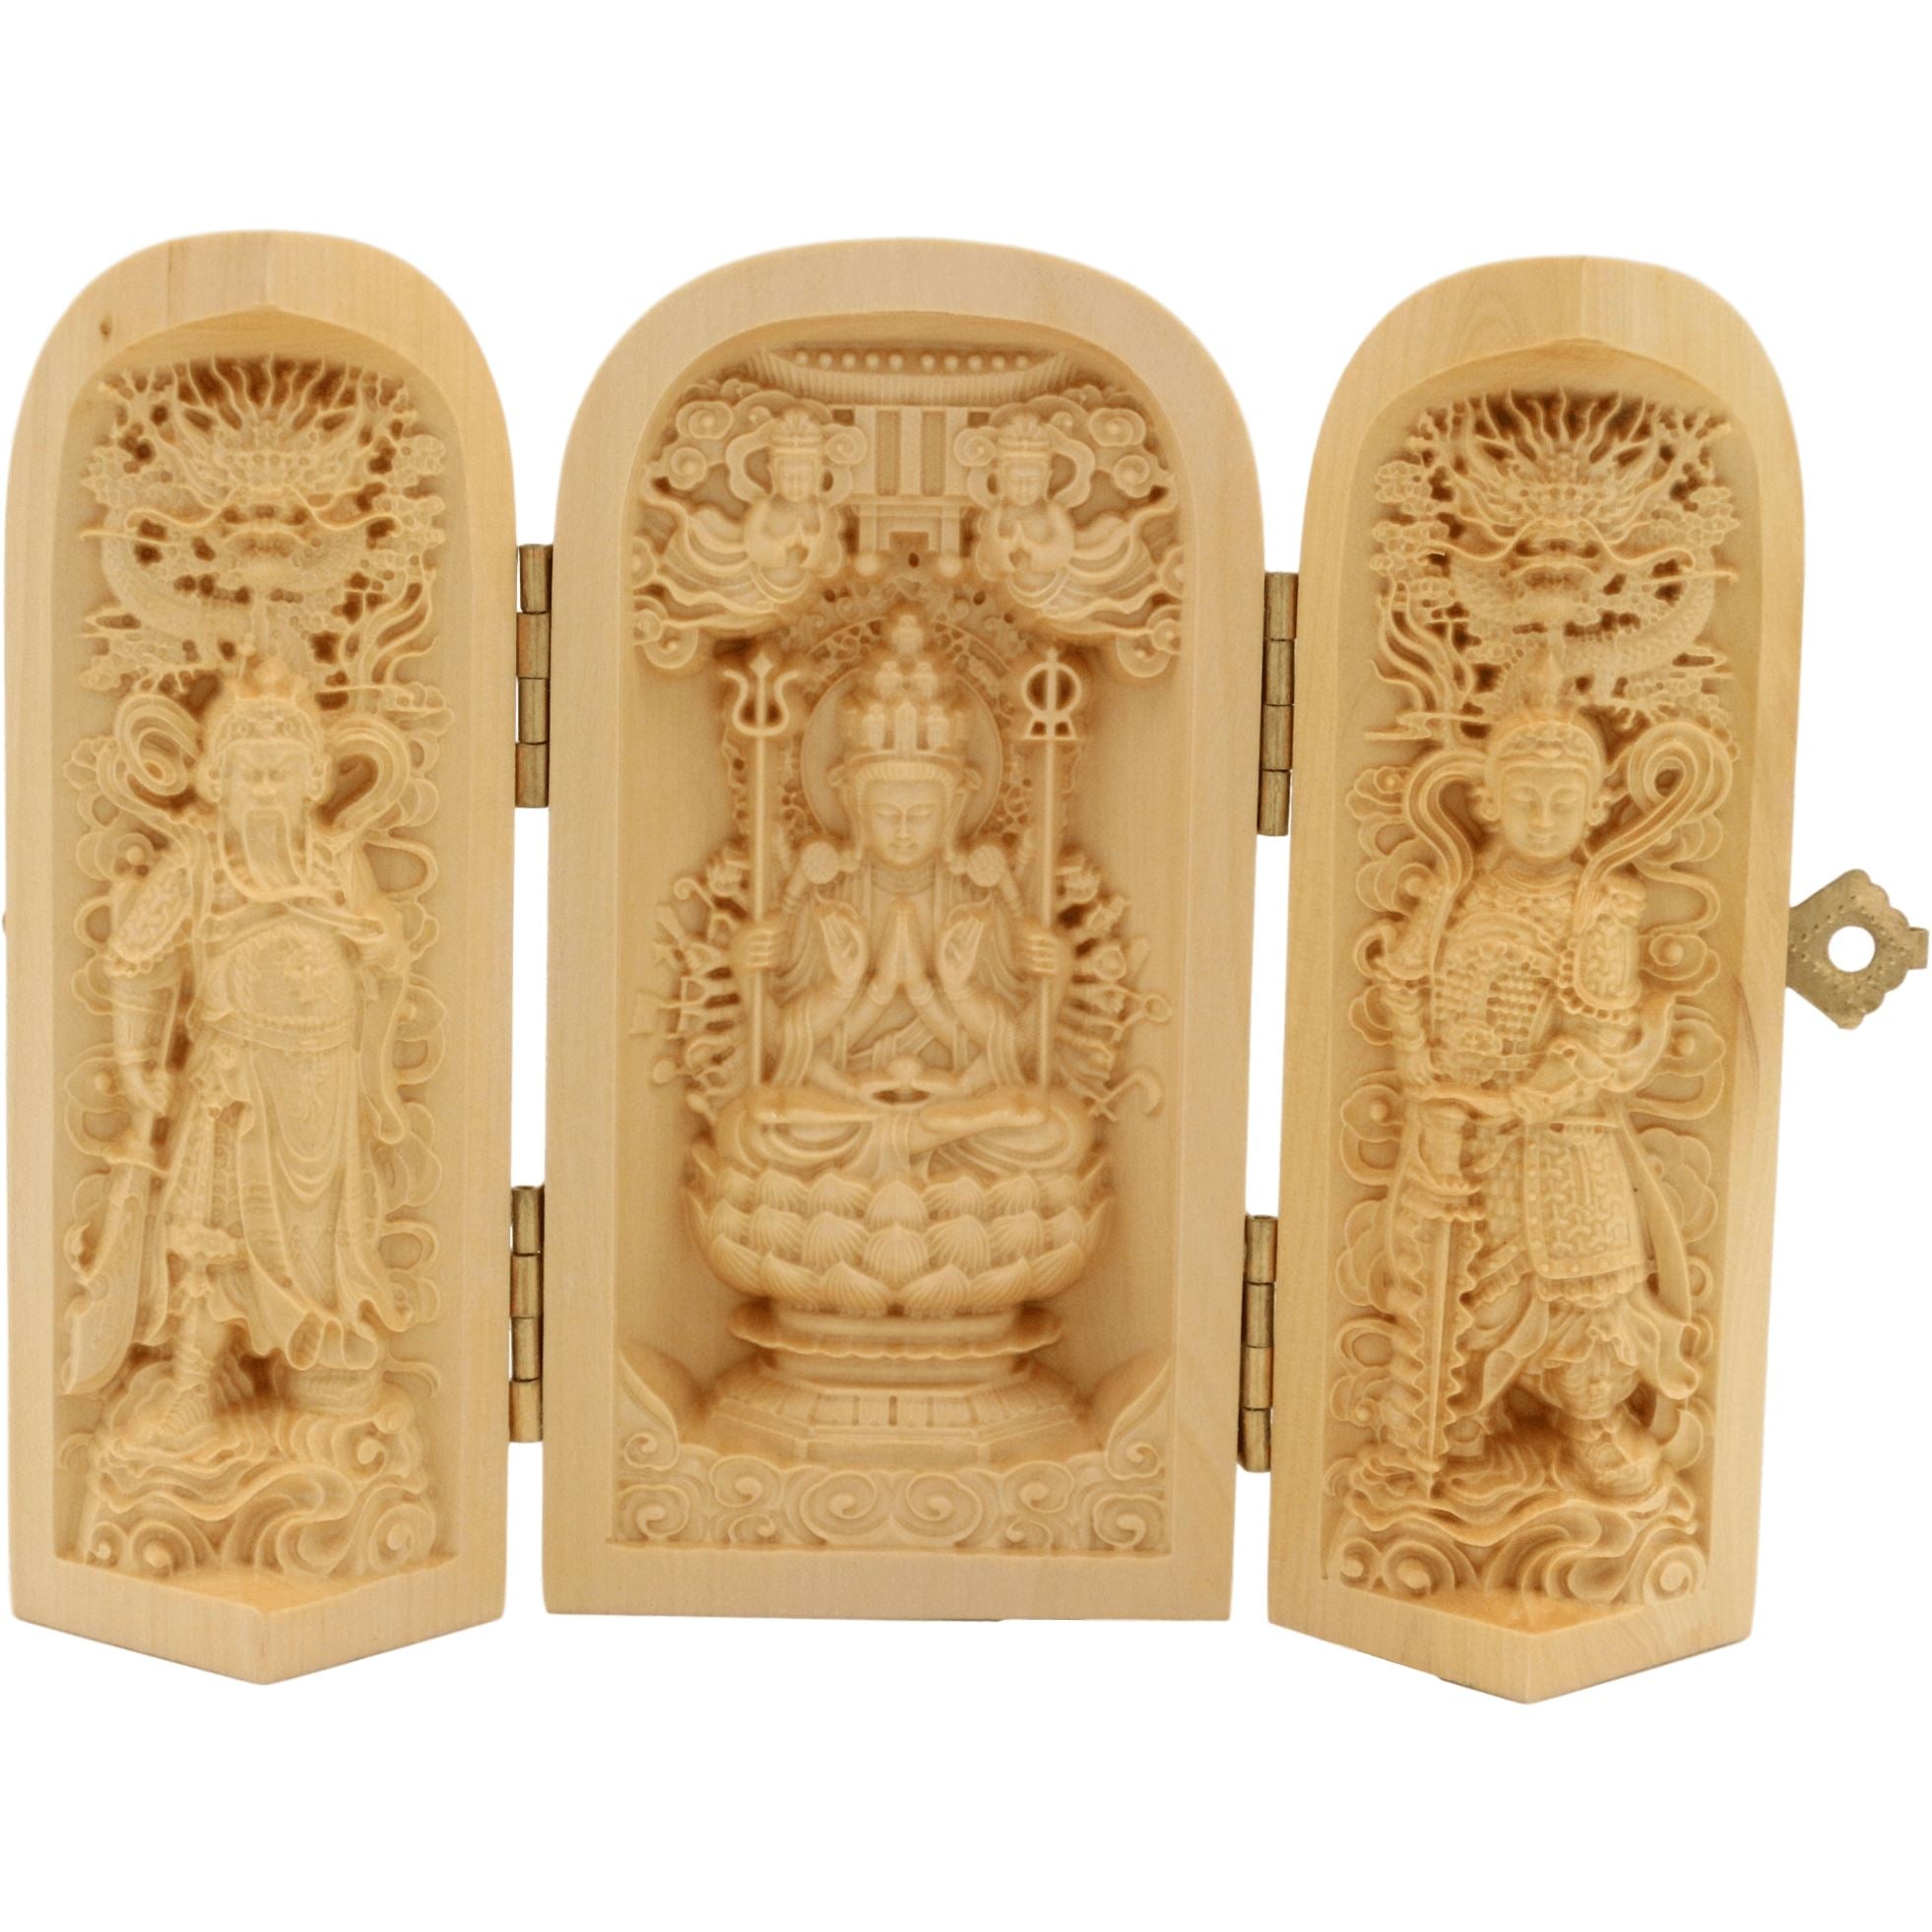 Cofrecito de 3 figurinas artesanales de madera - Bodhisattva Guanyin, Guan Yu y Skanda